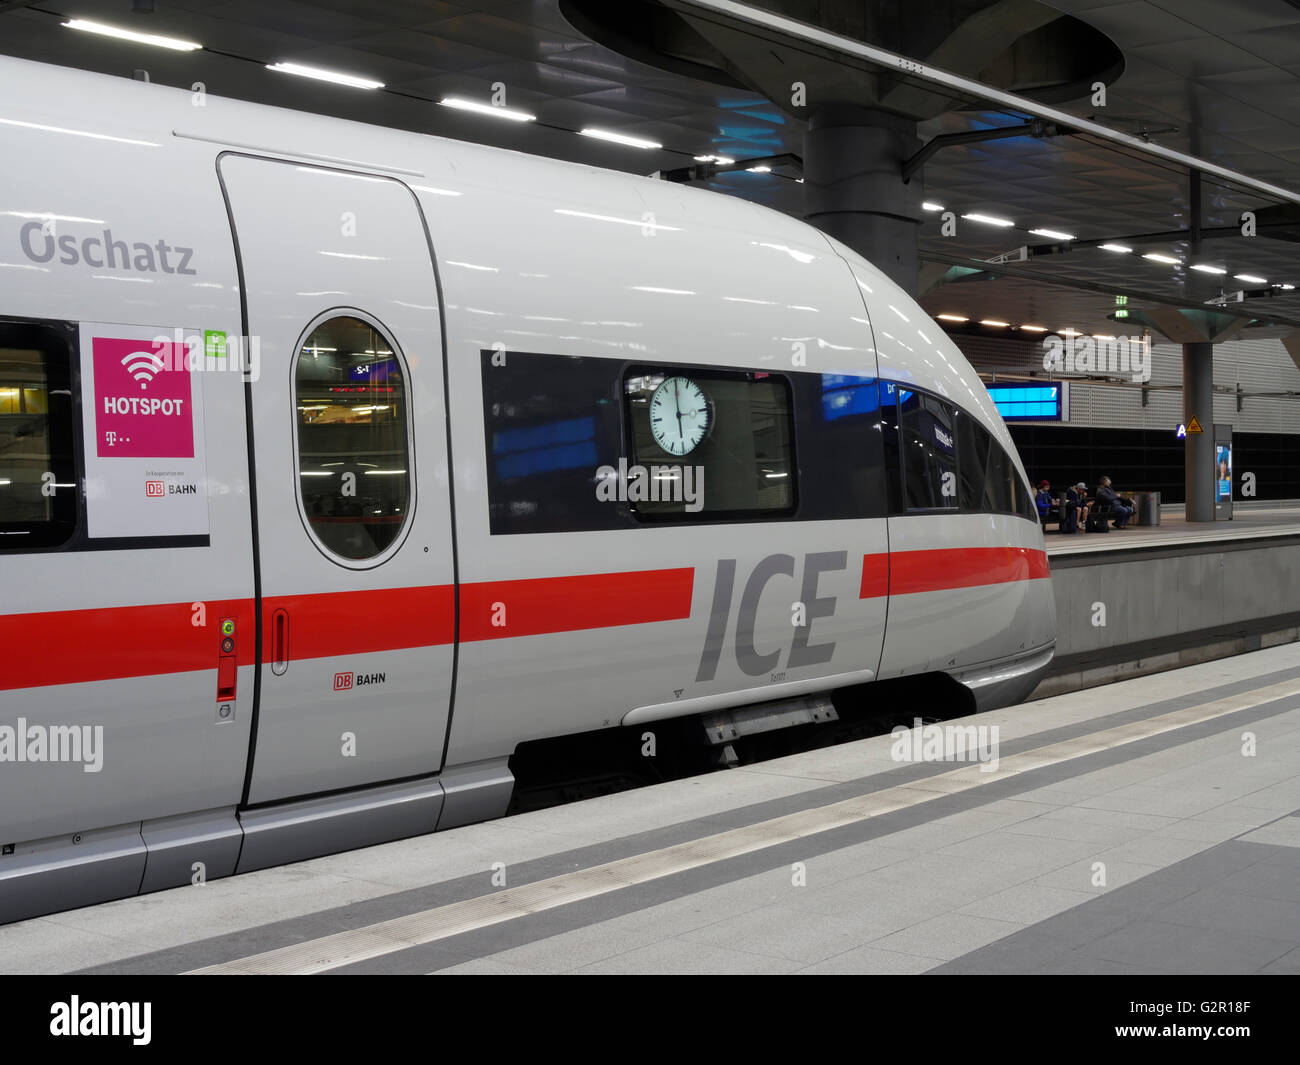 An Inter City Express (ICE) train waiting at platform in Hauptbahnhof Railway Station, Berlin City, Berlin, Germany, Europe Stock Photo